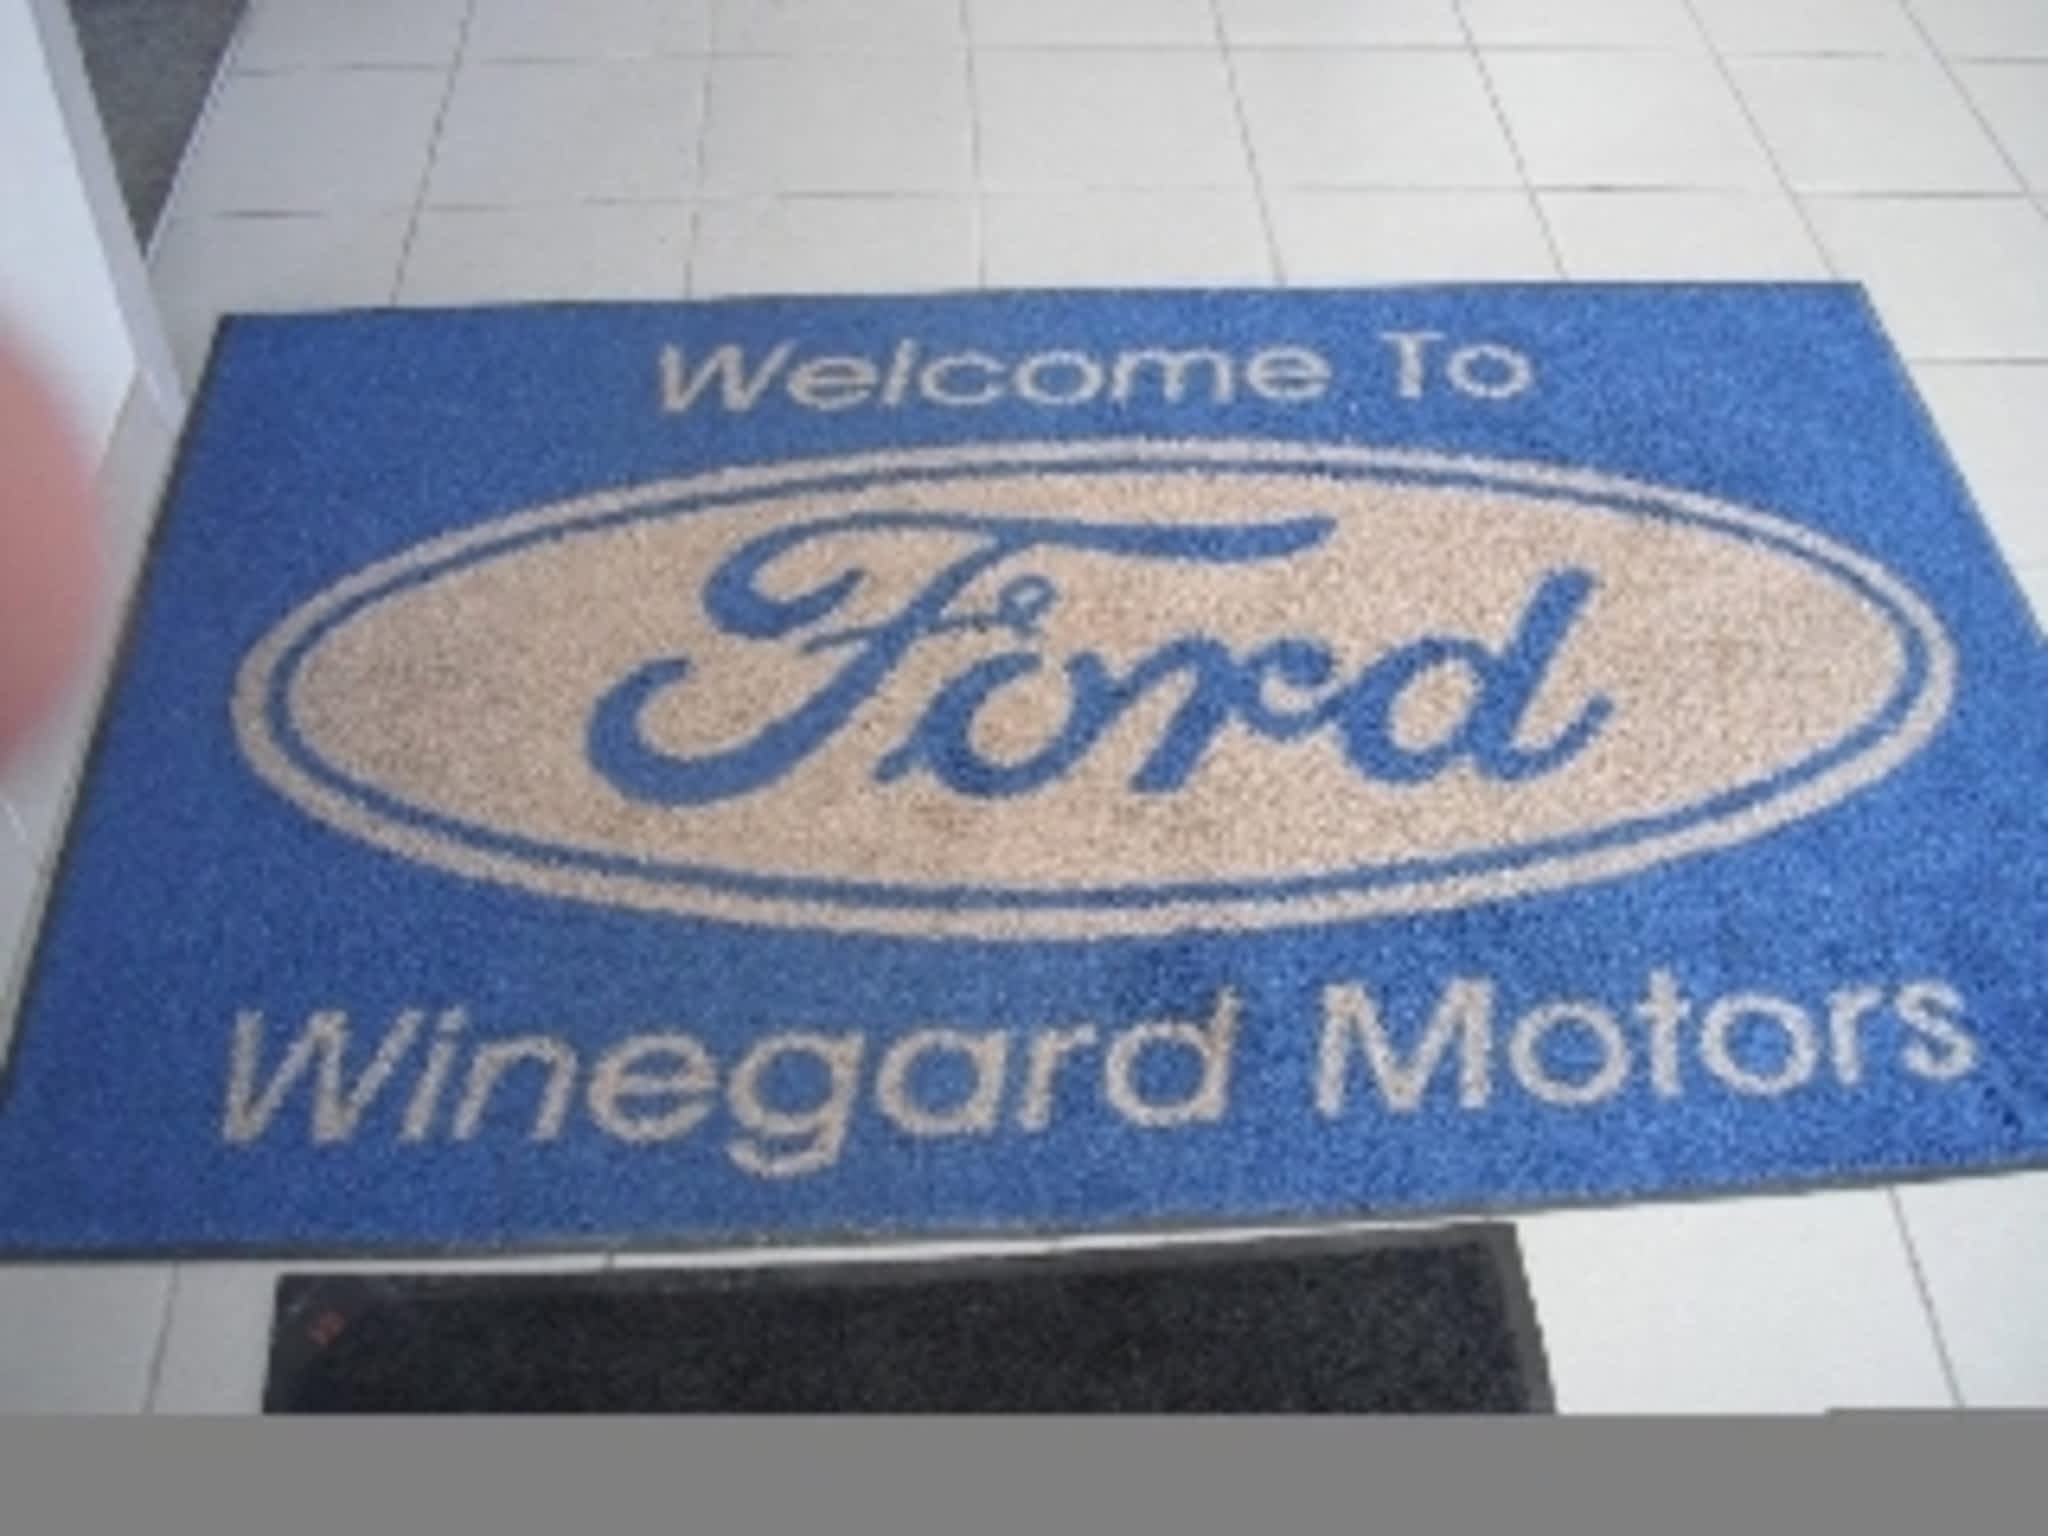 photo Winegard Motors Ford Lincoln